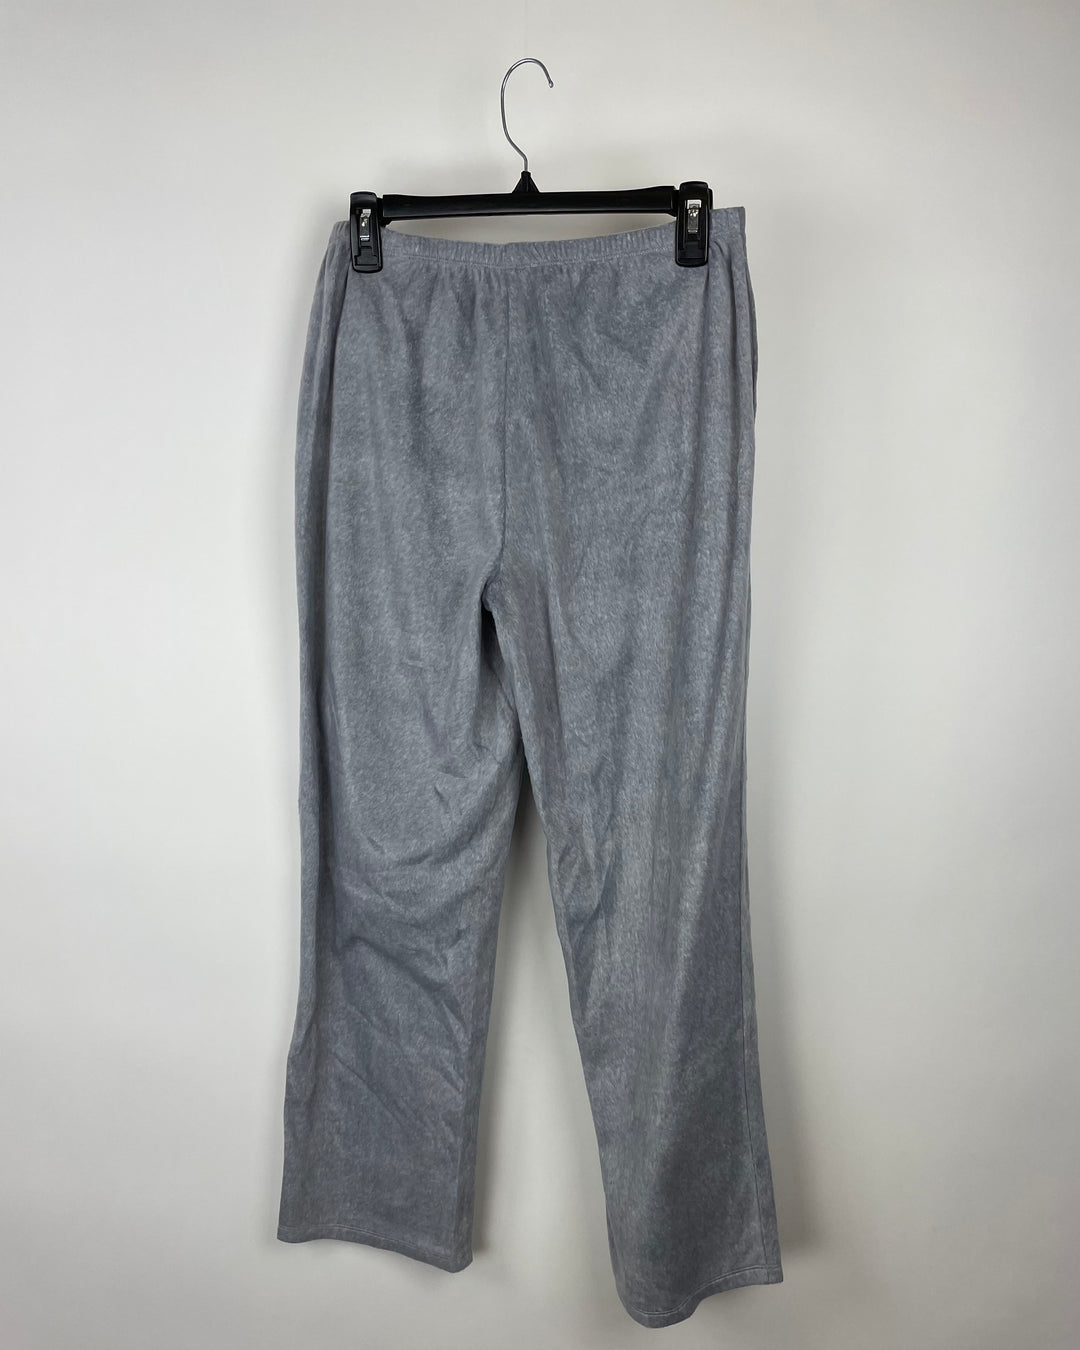 Grey Fuzzy Pajama Pants - Small